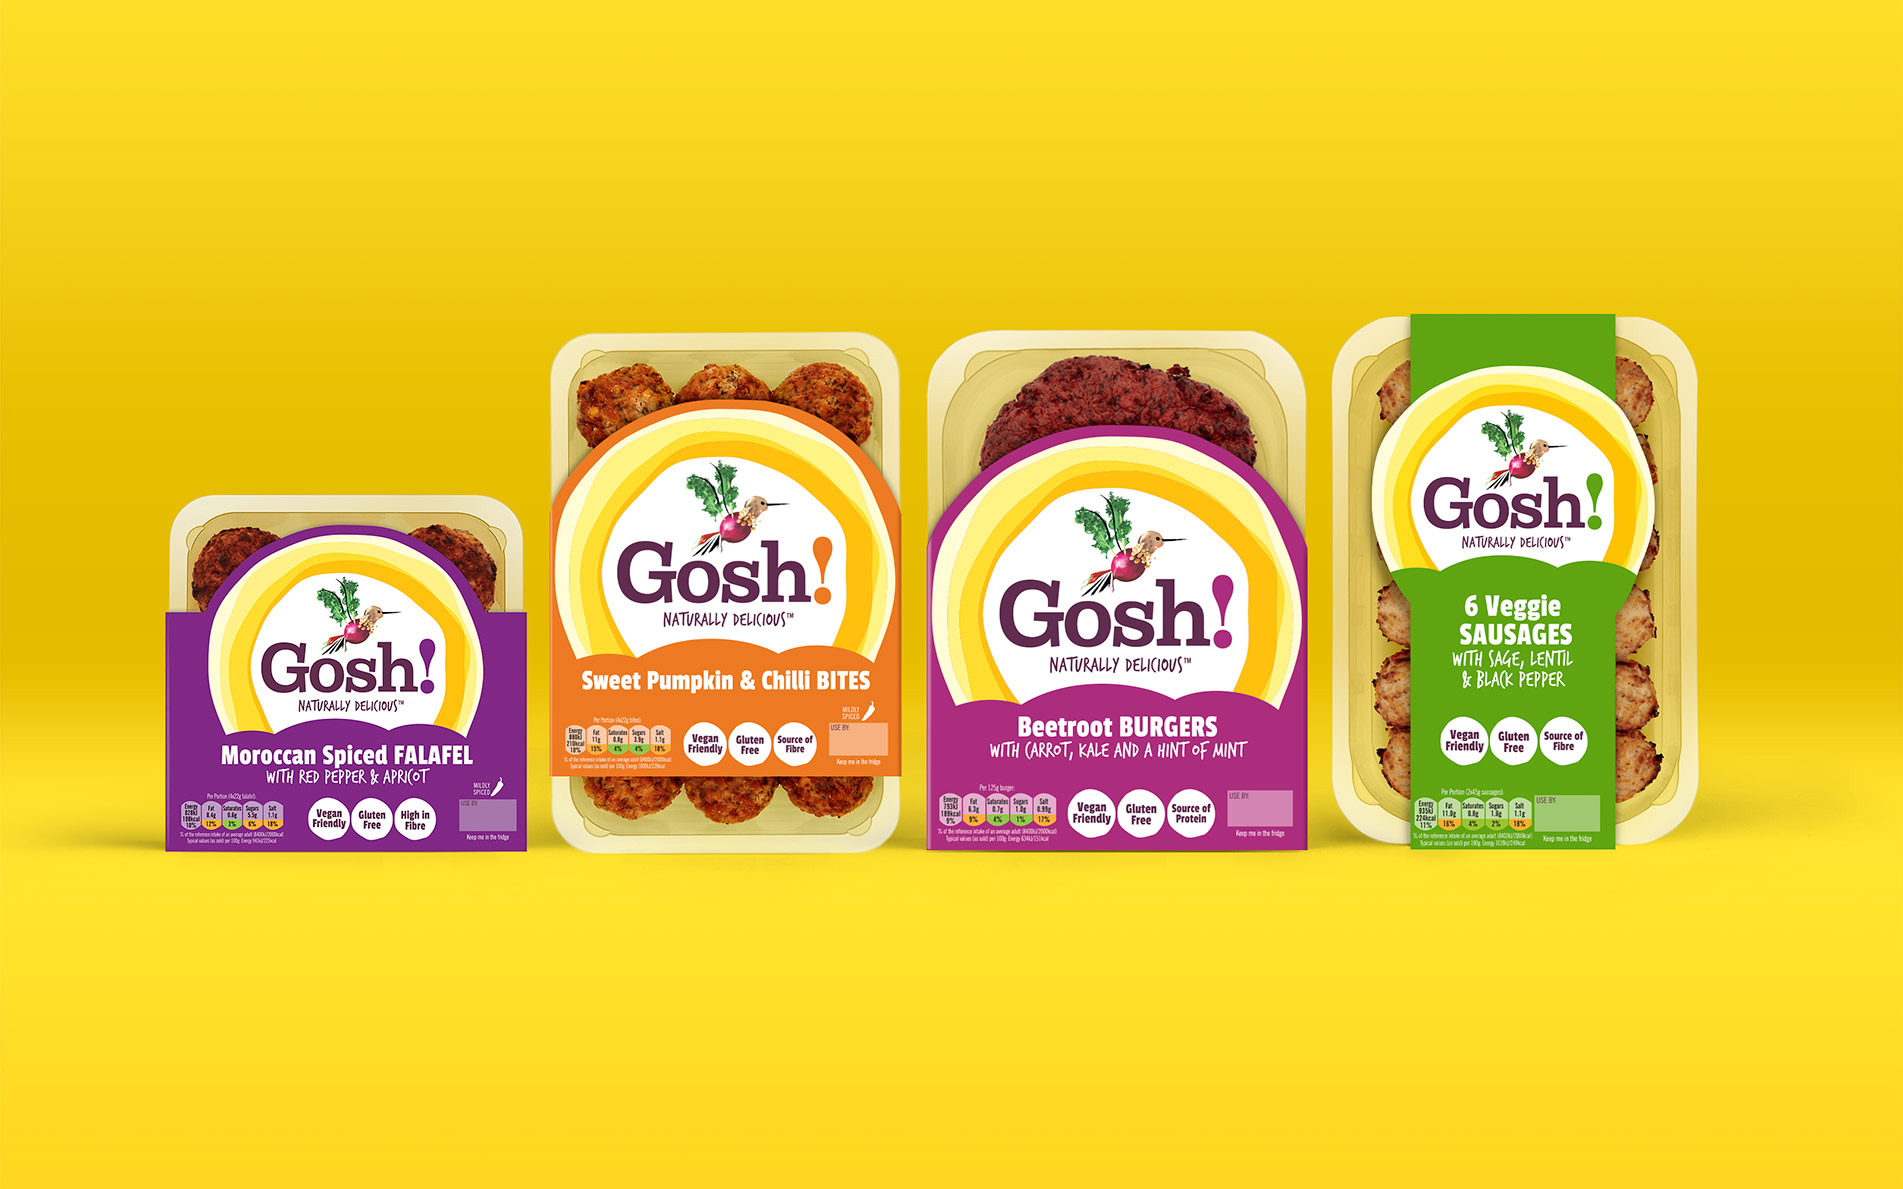 Gosh! naturally free-from snacks packaging design - Rylands Brand Design